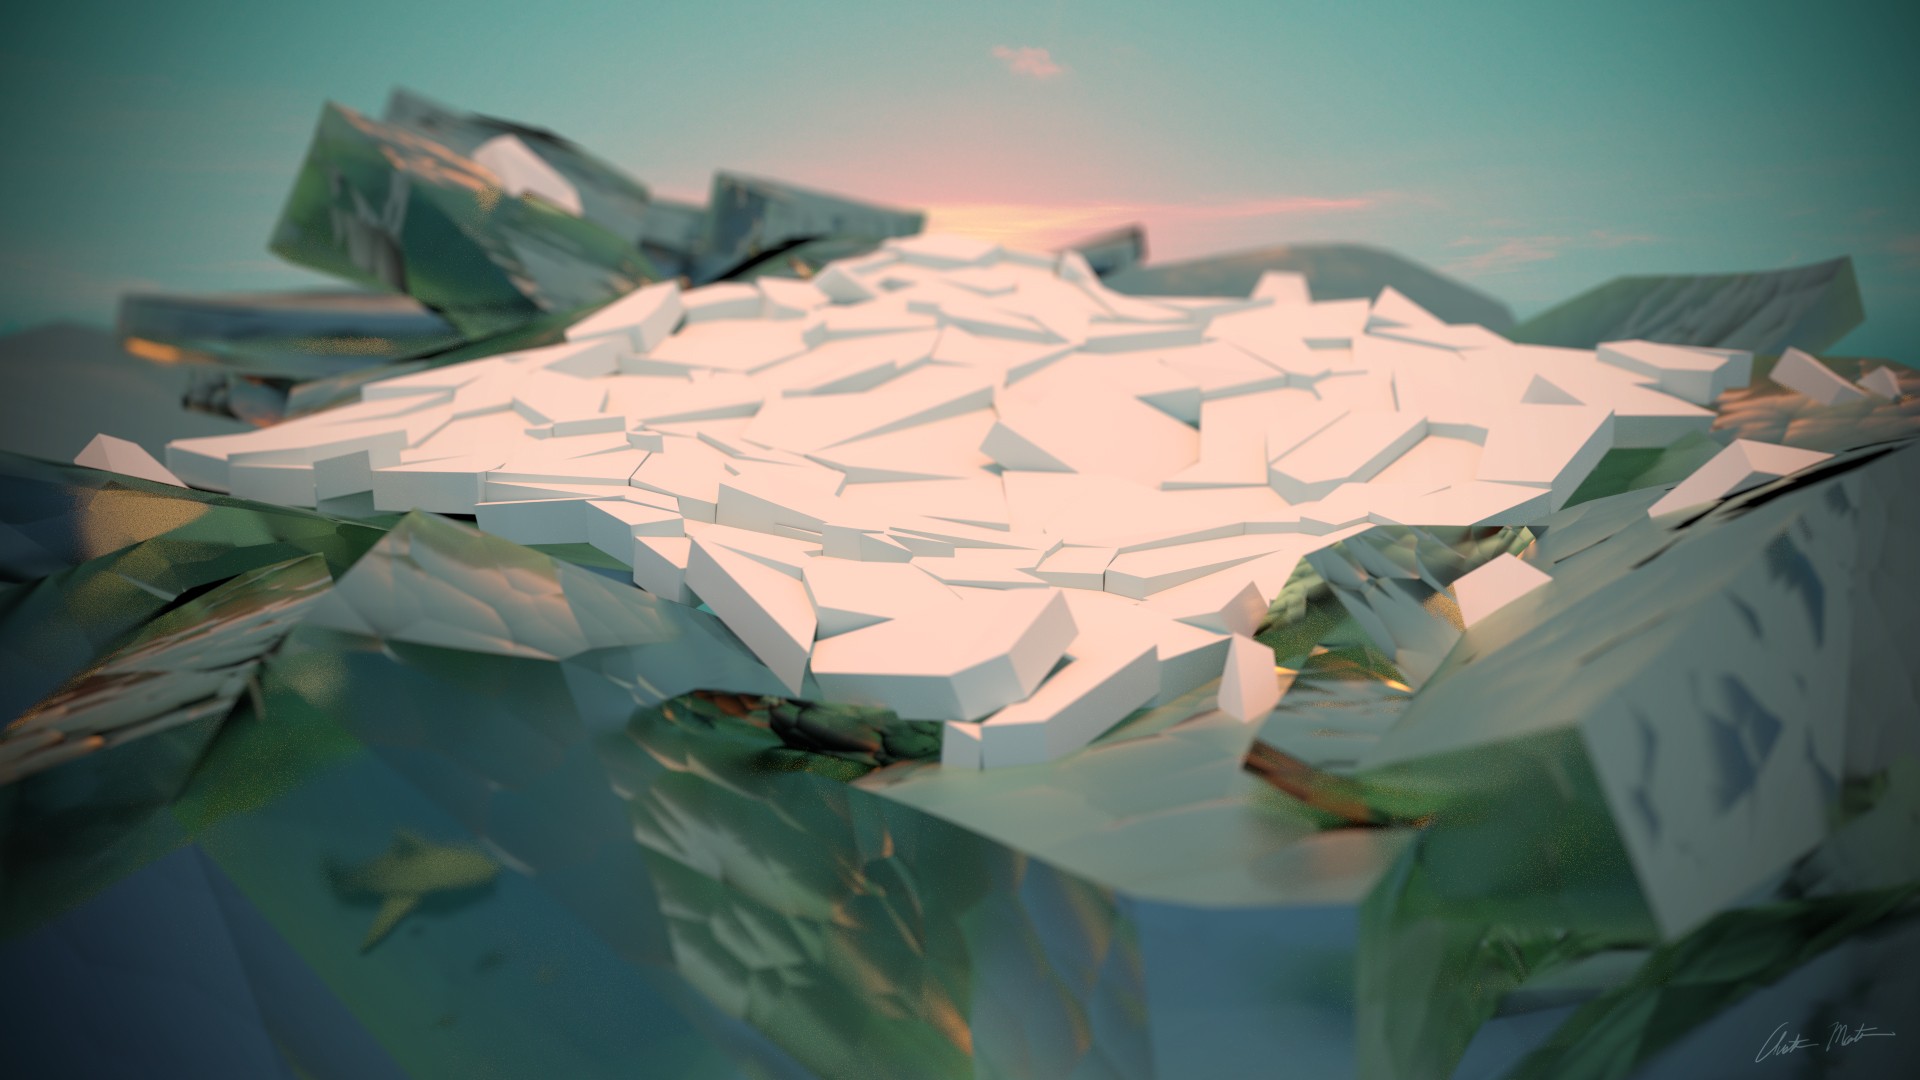 General 1920x1080 ice sea sunset minimalism Voronoi diagram abstract fantasy art imagination digital art CGI